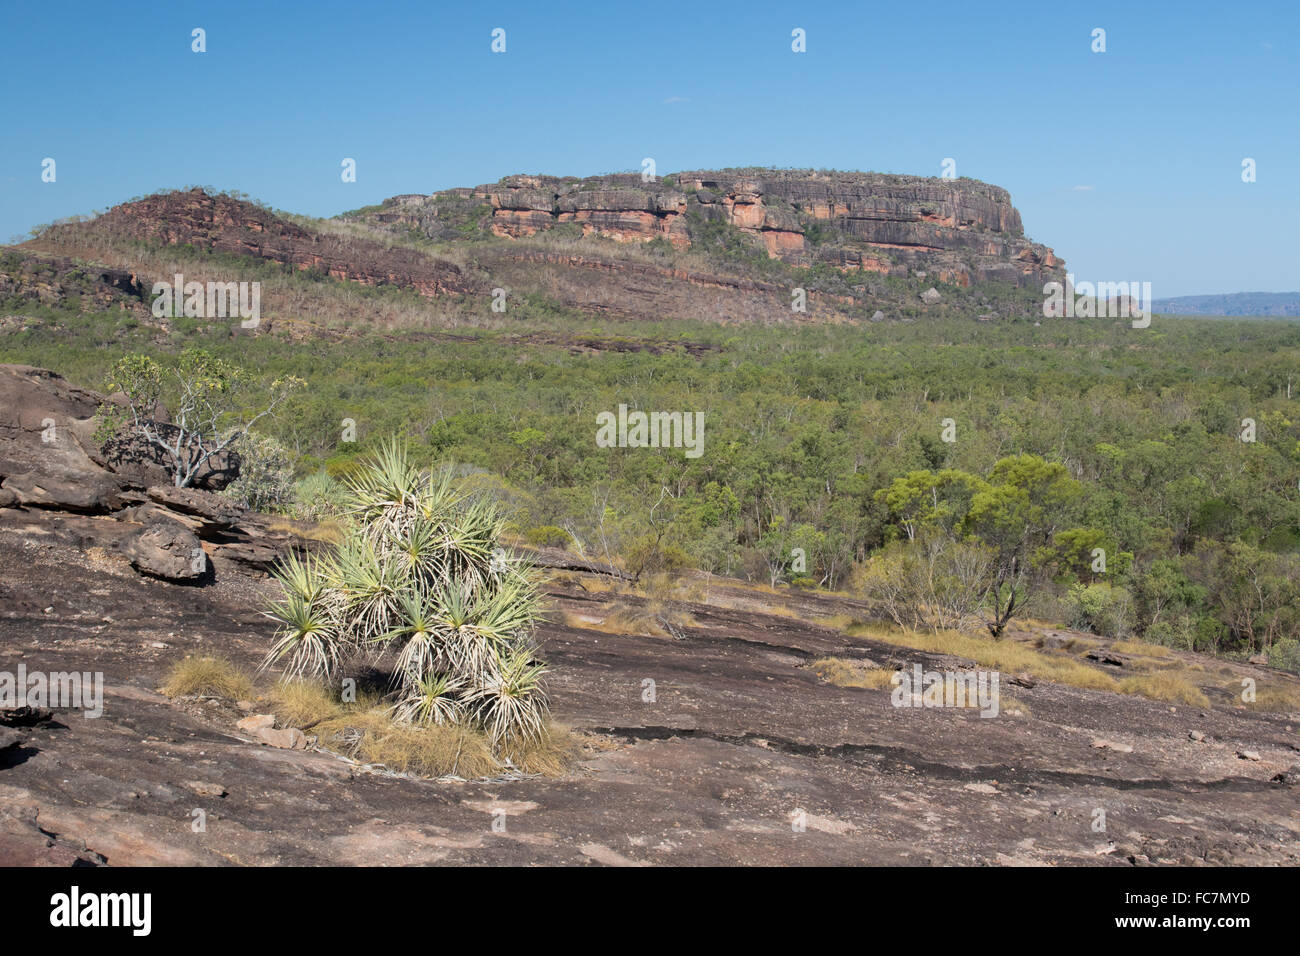 Nourlangie Rock, Kakadu National Park, Australia Foto Stock